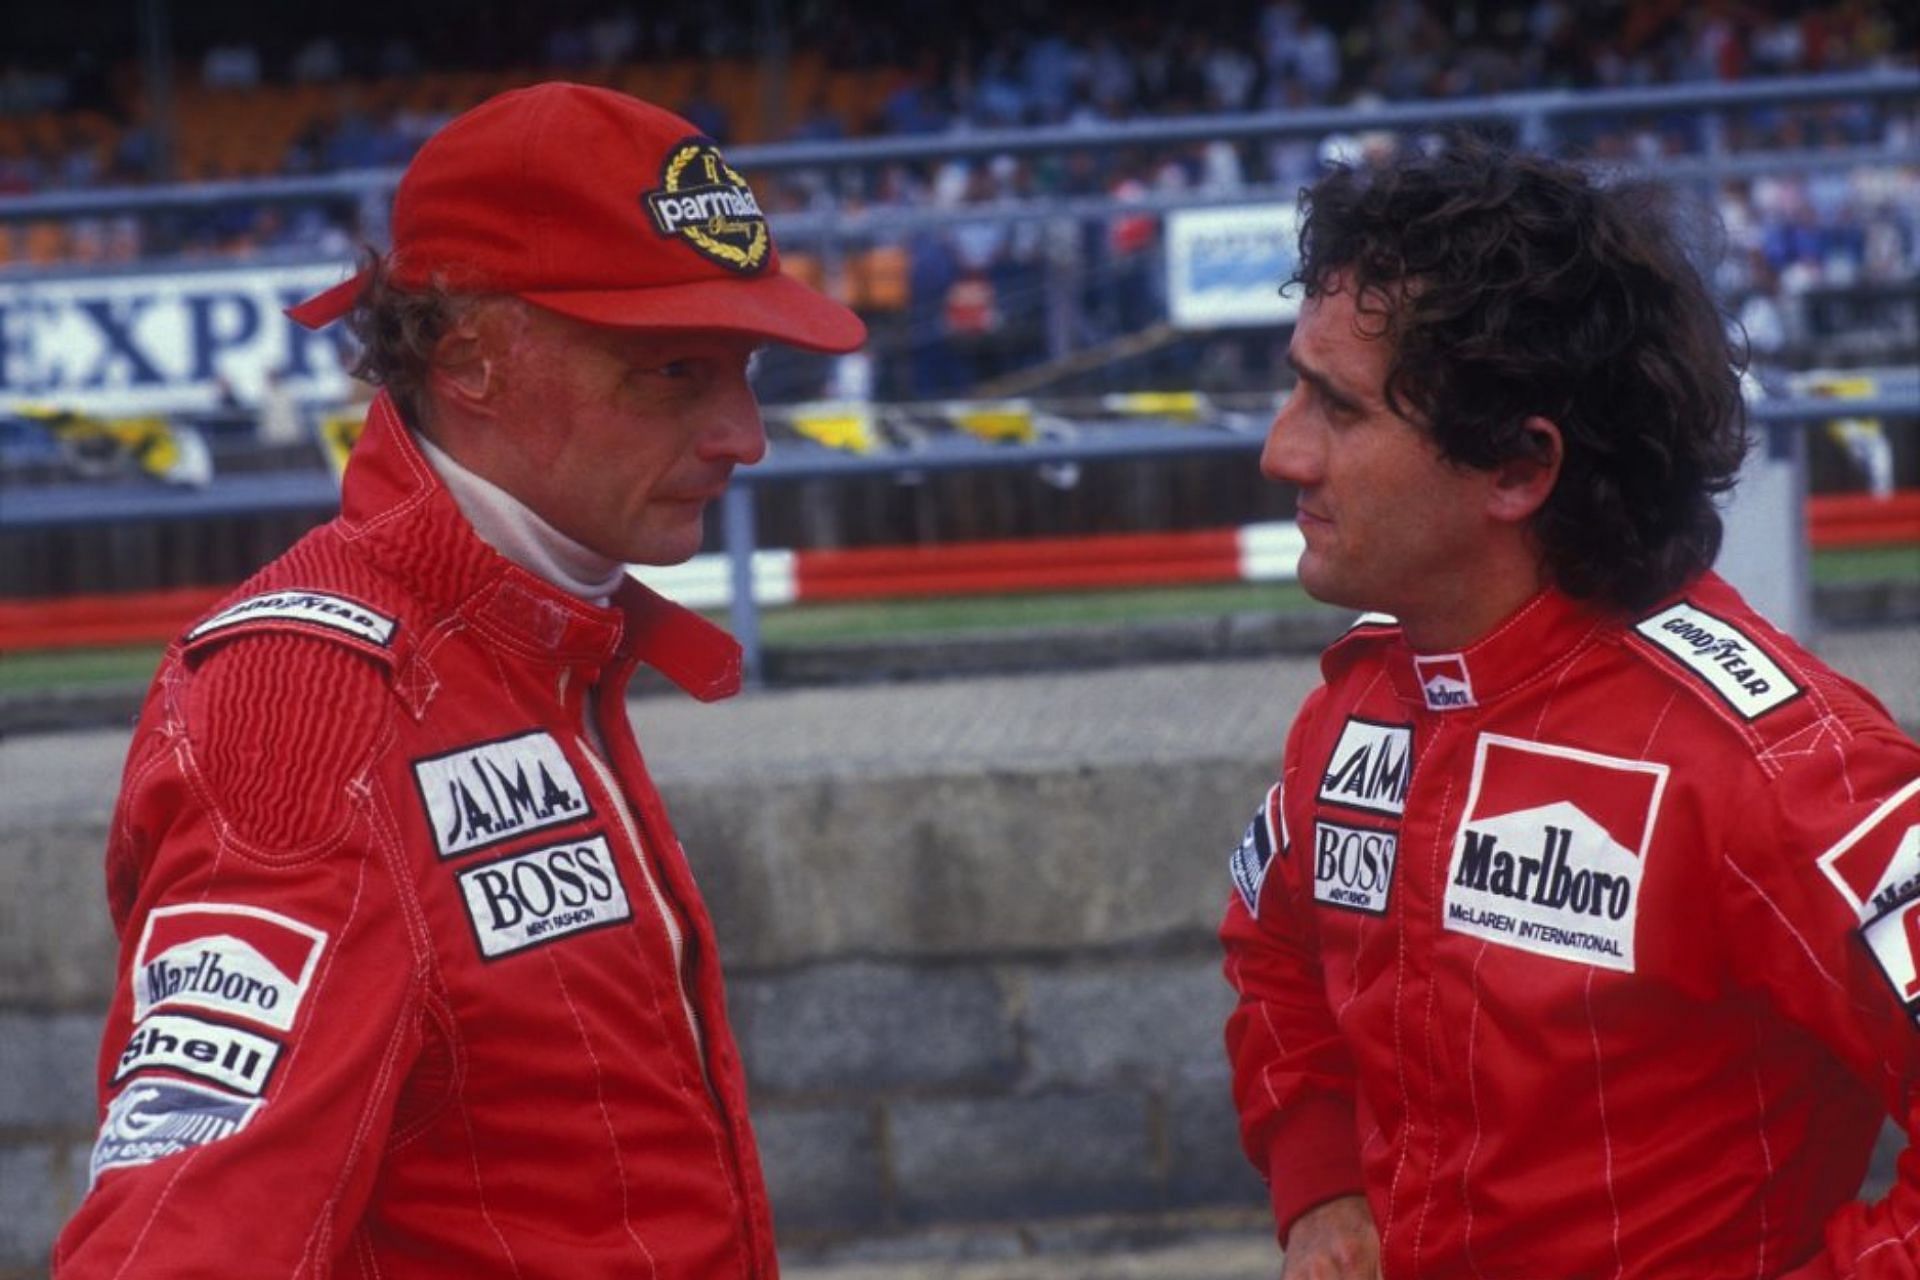 Niki Lauda (L) and Alain Prost (R) (Photo by Pool Bakalian-De Keerle/Gamma-Rapho via Getty Images)